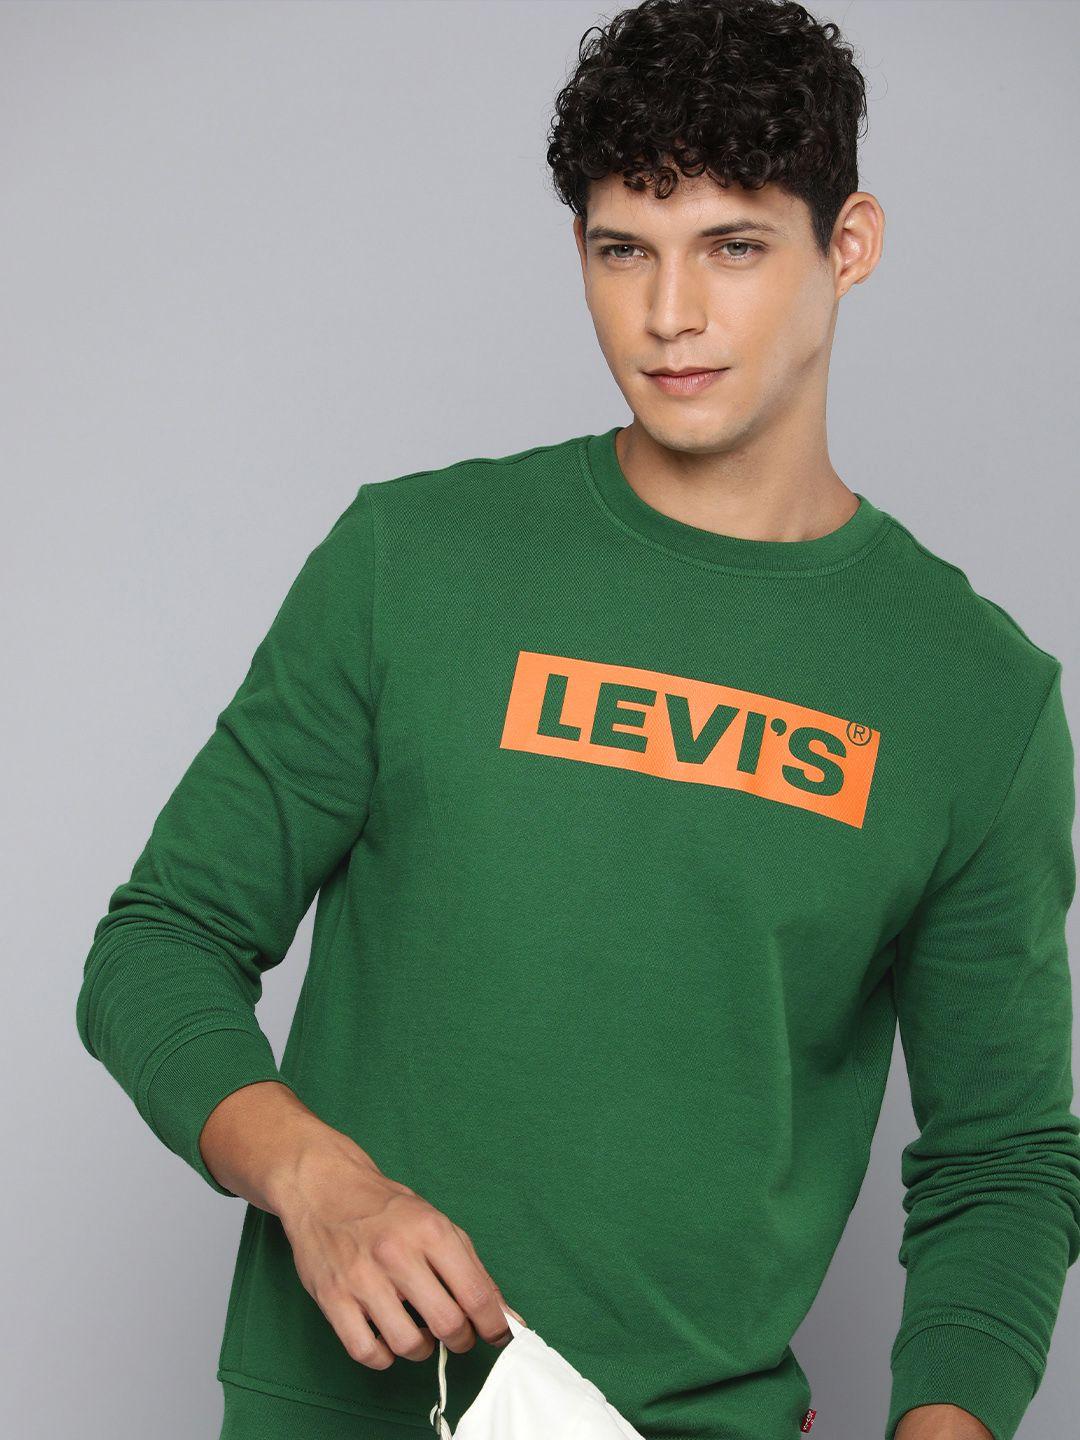 levis-pure-cotton-brand-logo-printed-casual-sweatshirt